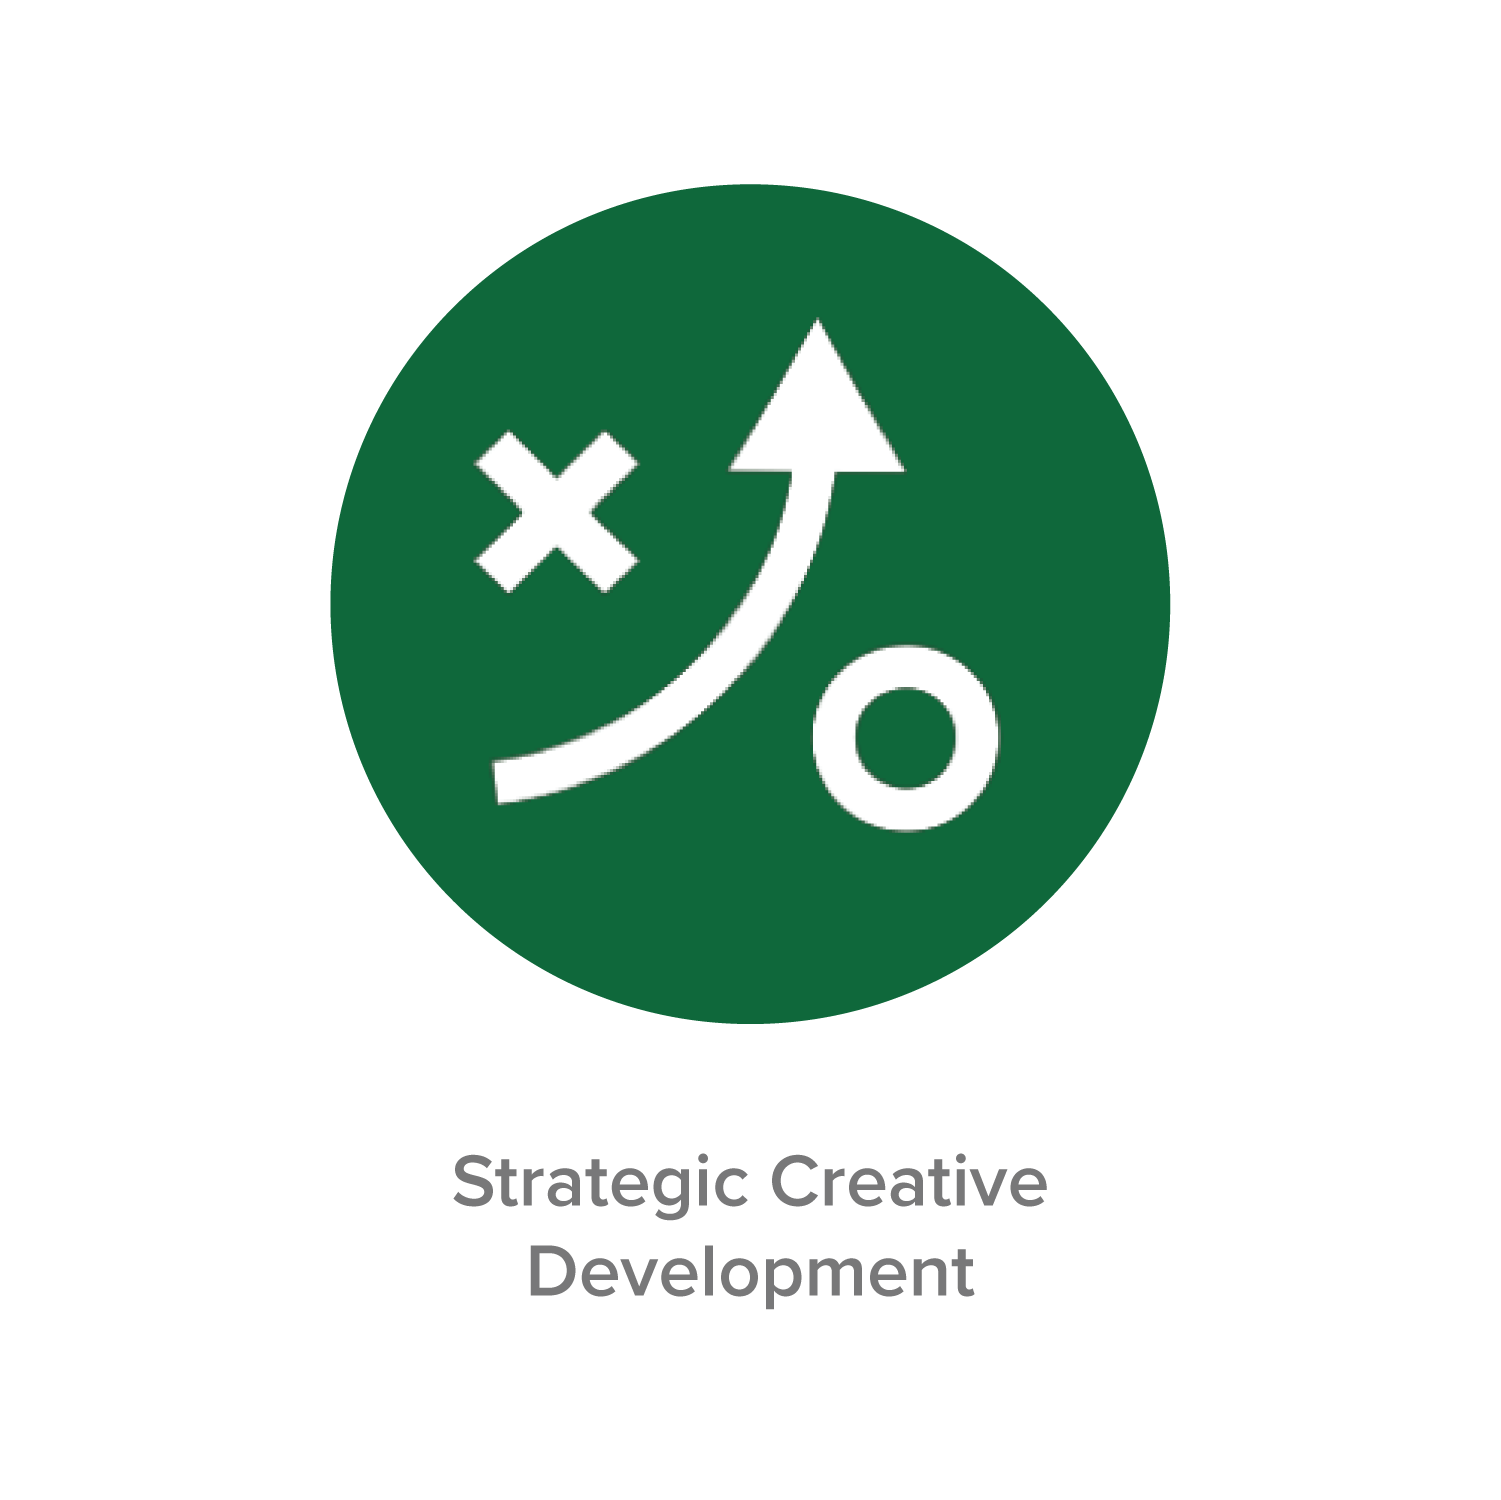 Strategic Creative Development graphic